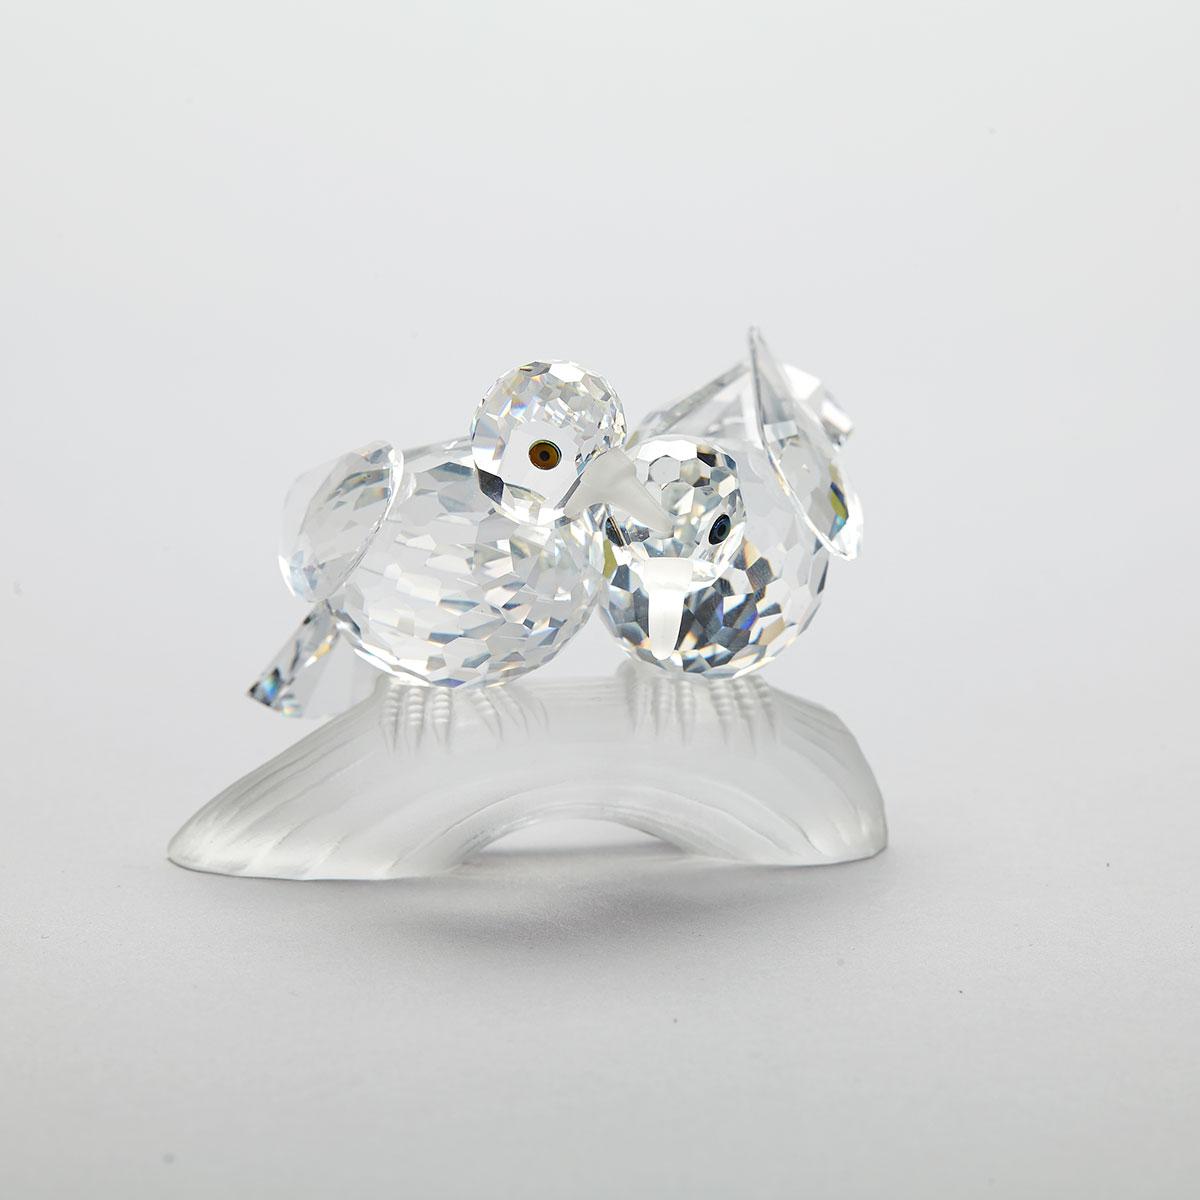 Swarovski Crystal Figurines, “Caring and Sharing” Series, 1987-89